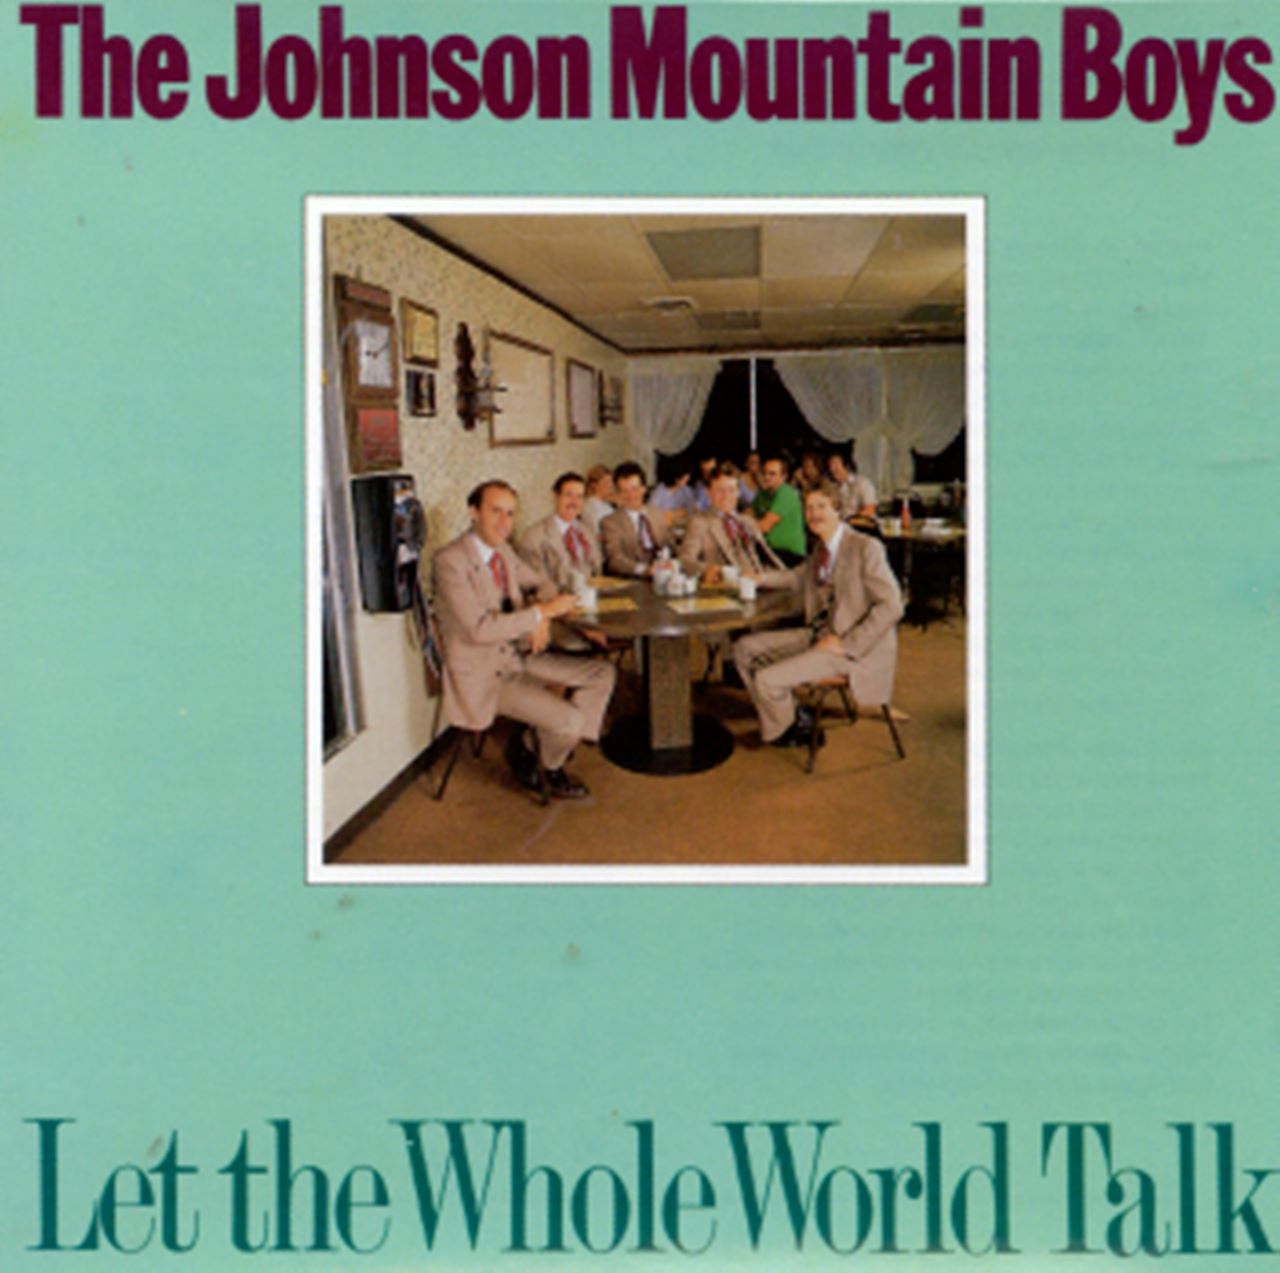 Johnson Mountain Boys - Let The World Whole Talk cover album